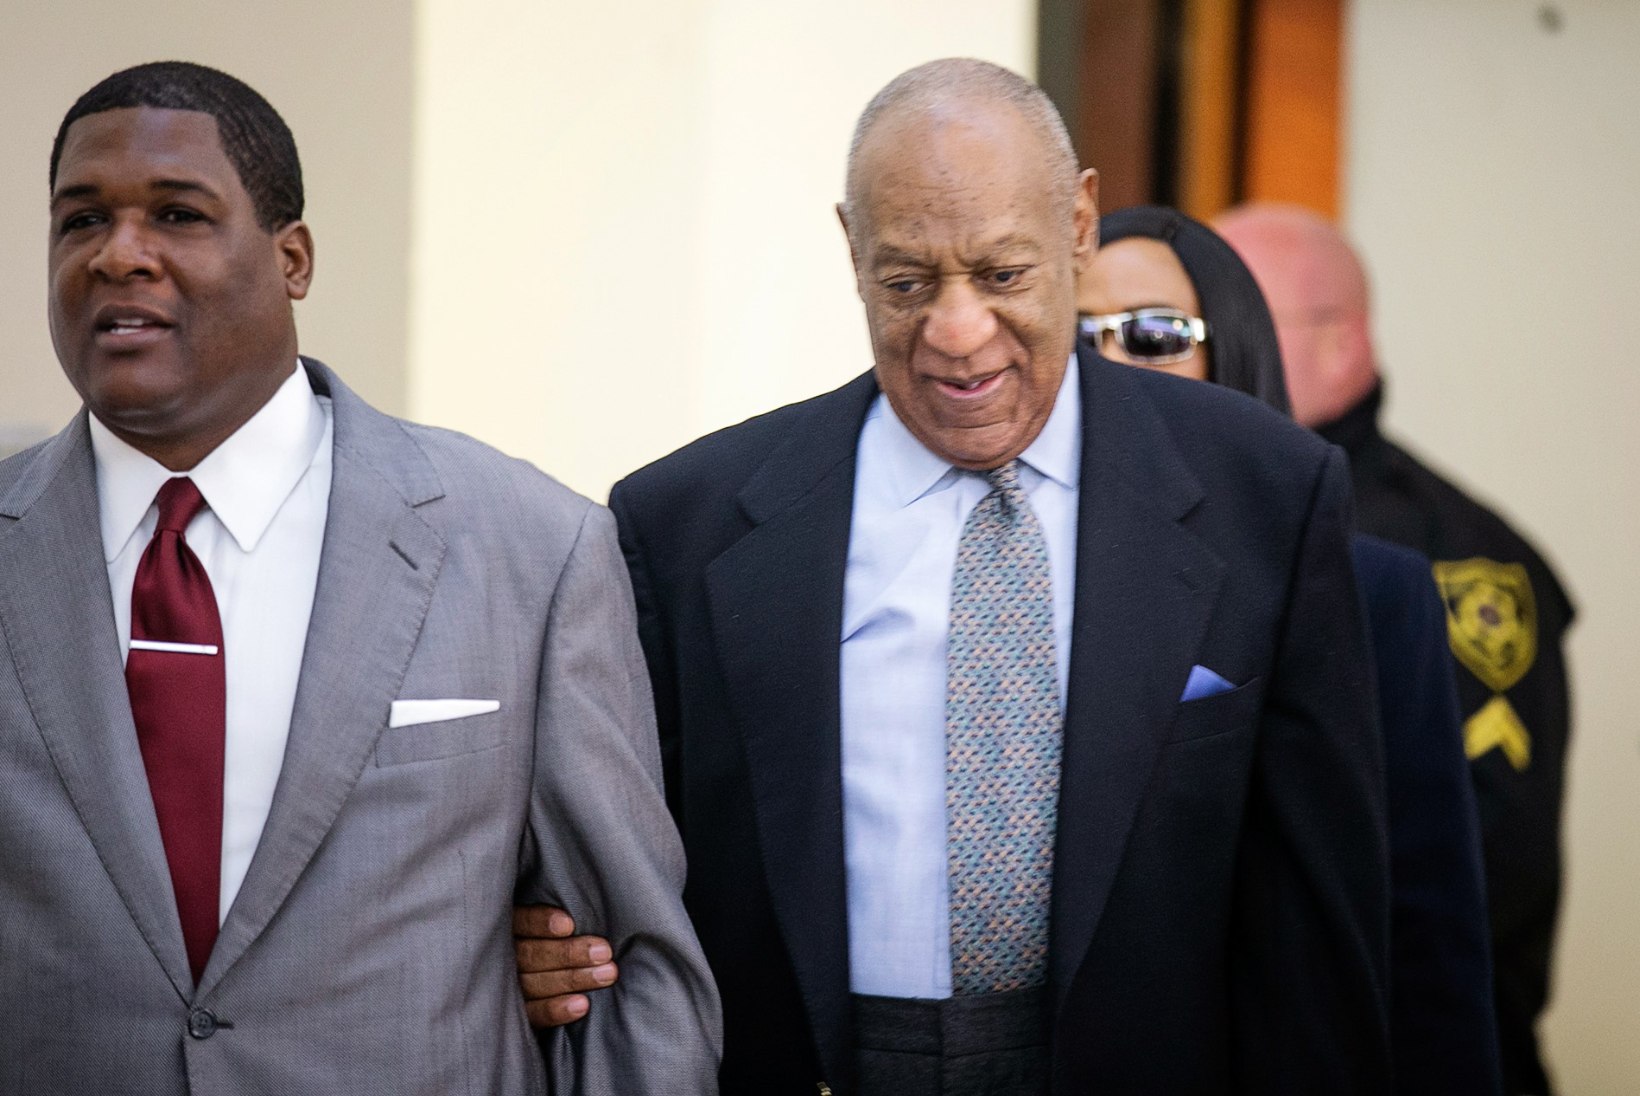 Kas Cosby vaid teeskleb pimedat?